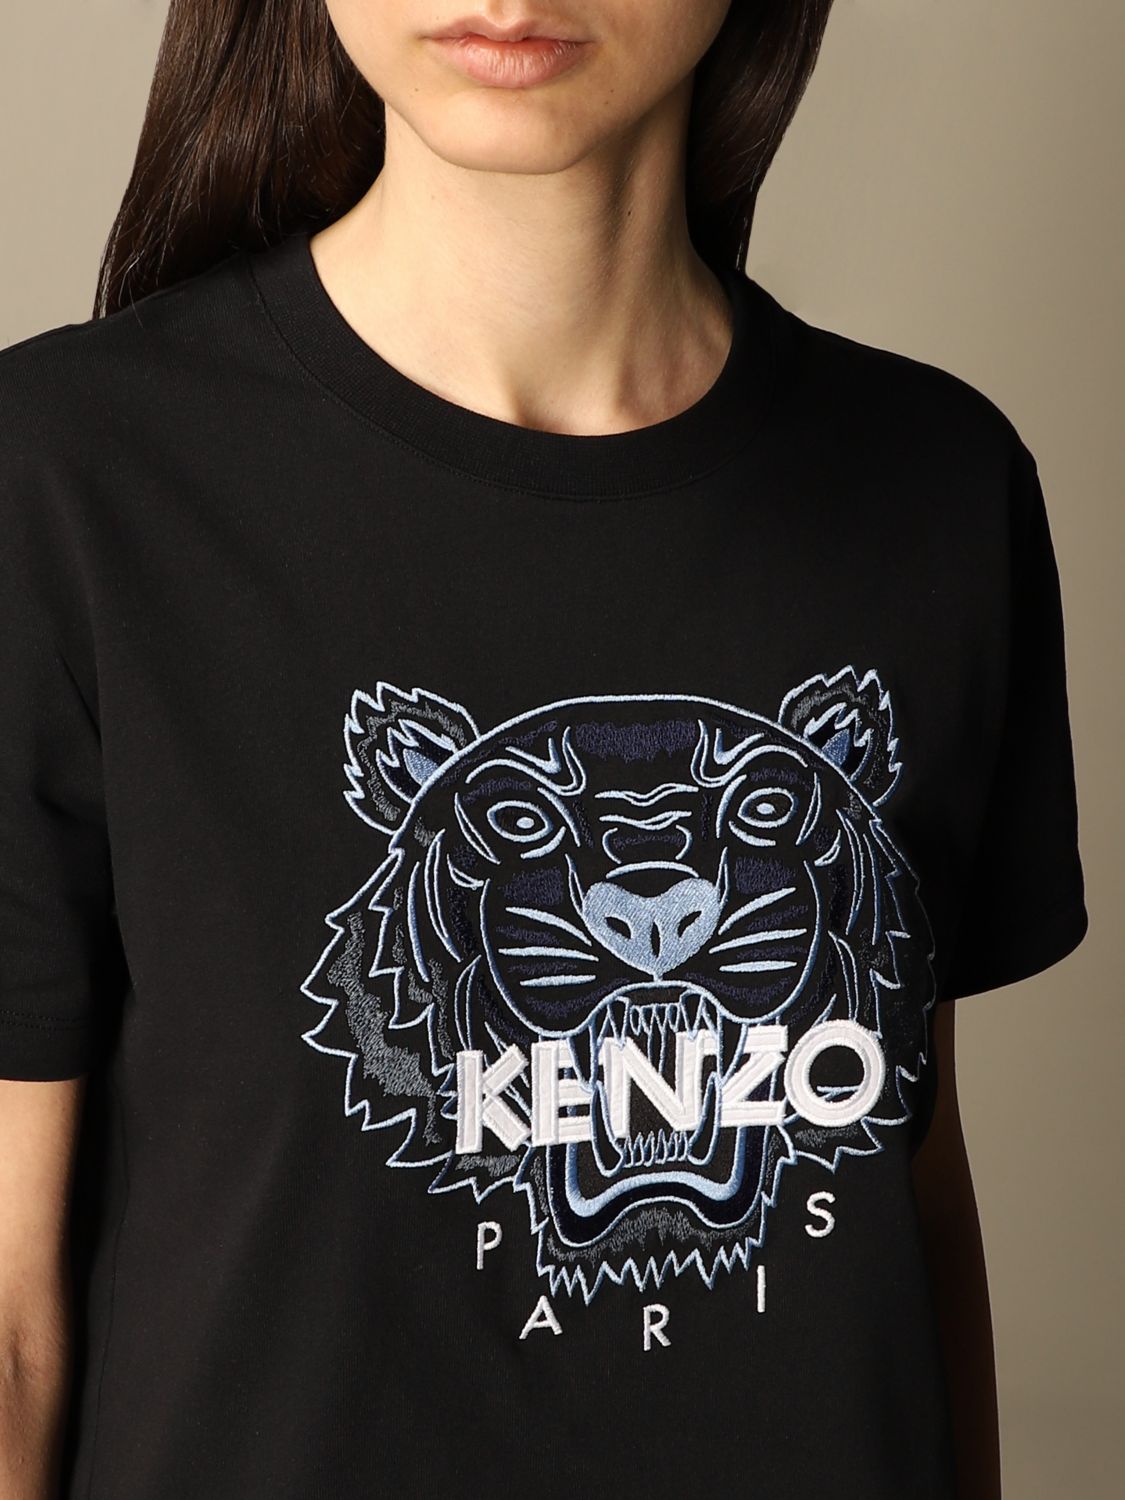 black kenzo paris t shirt